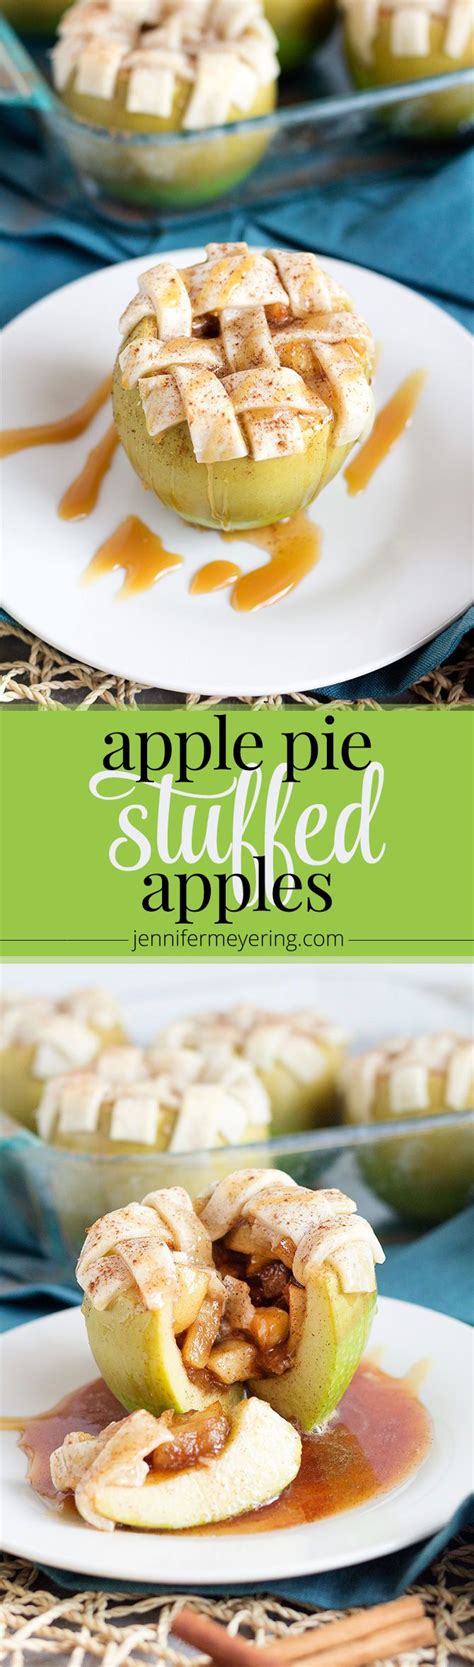 Best Dessert Recipes Fruit Recipes Apple Recipes Healthy Desserts